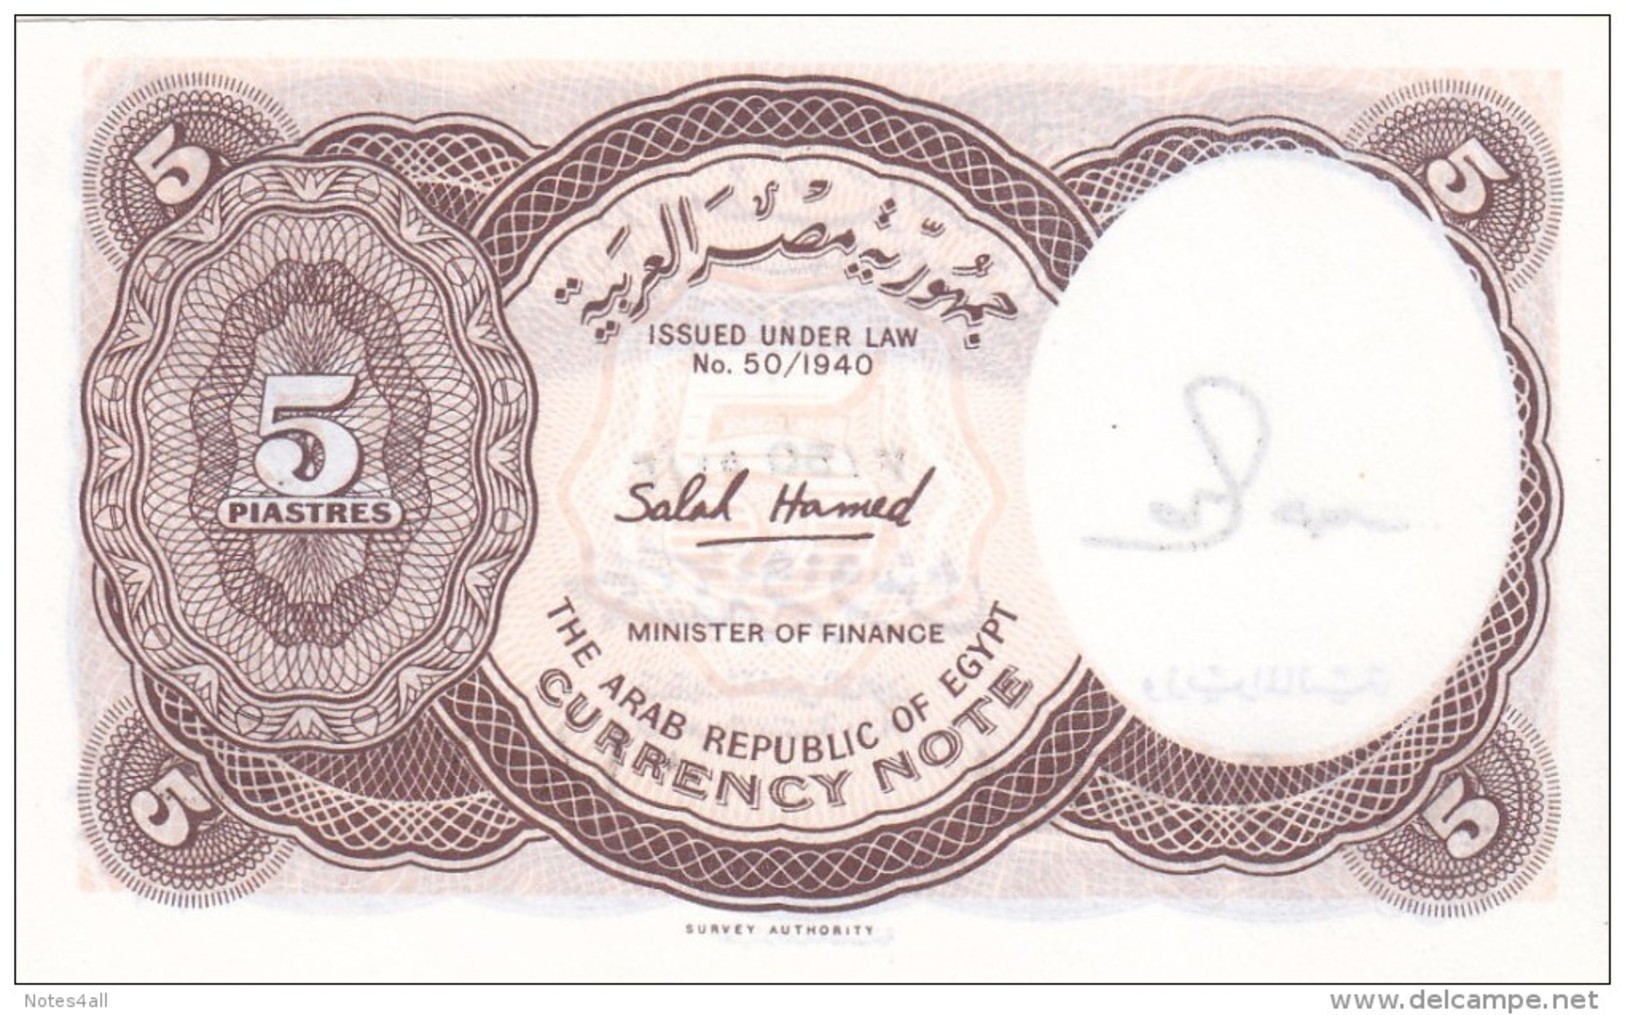 EGYPT 5 PIASTERS 1971 P-182i SIG/salah Hamed UNC Cv=$25.00 SCARCE RARE PREFIX 50 - Egypt